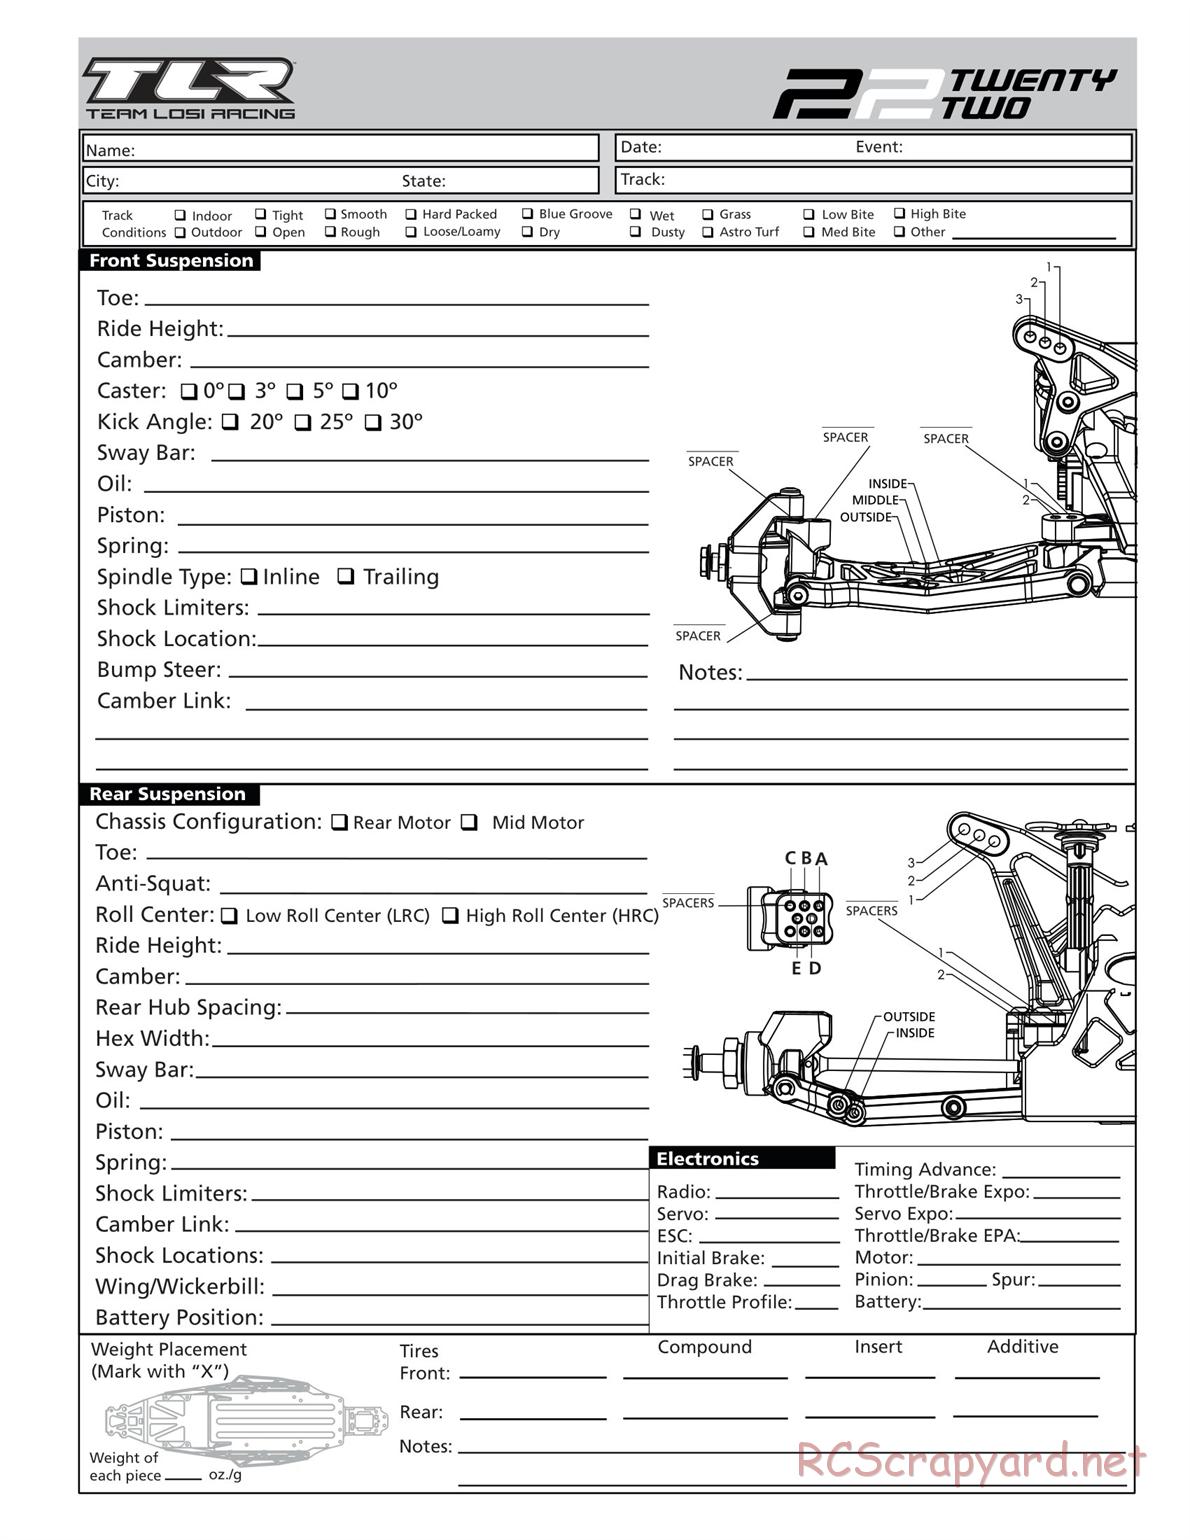 Team Losi - TLR 22 TwentyTwo - Manual - Page 11